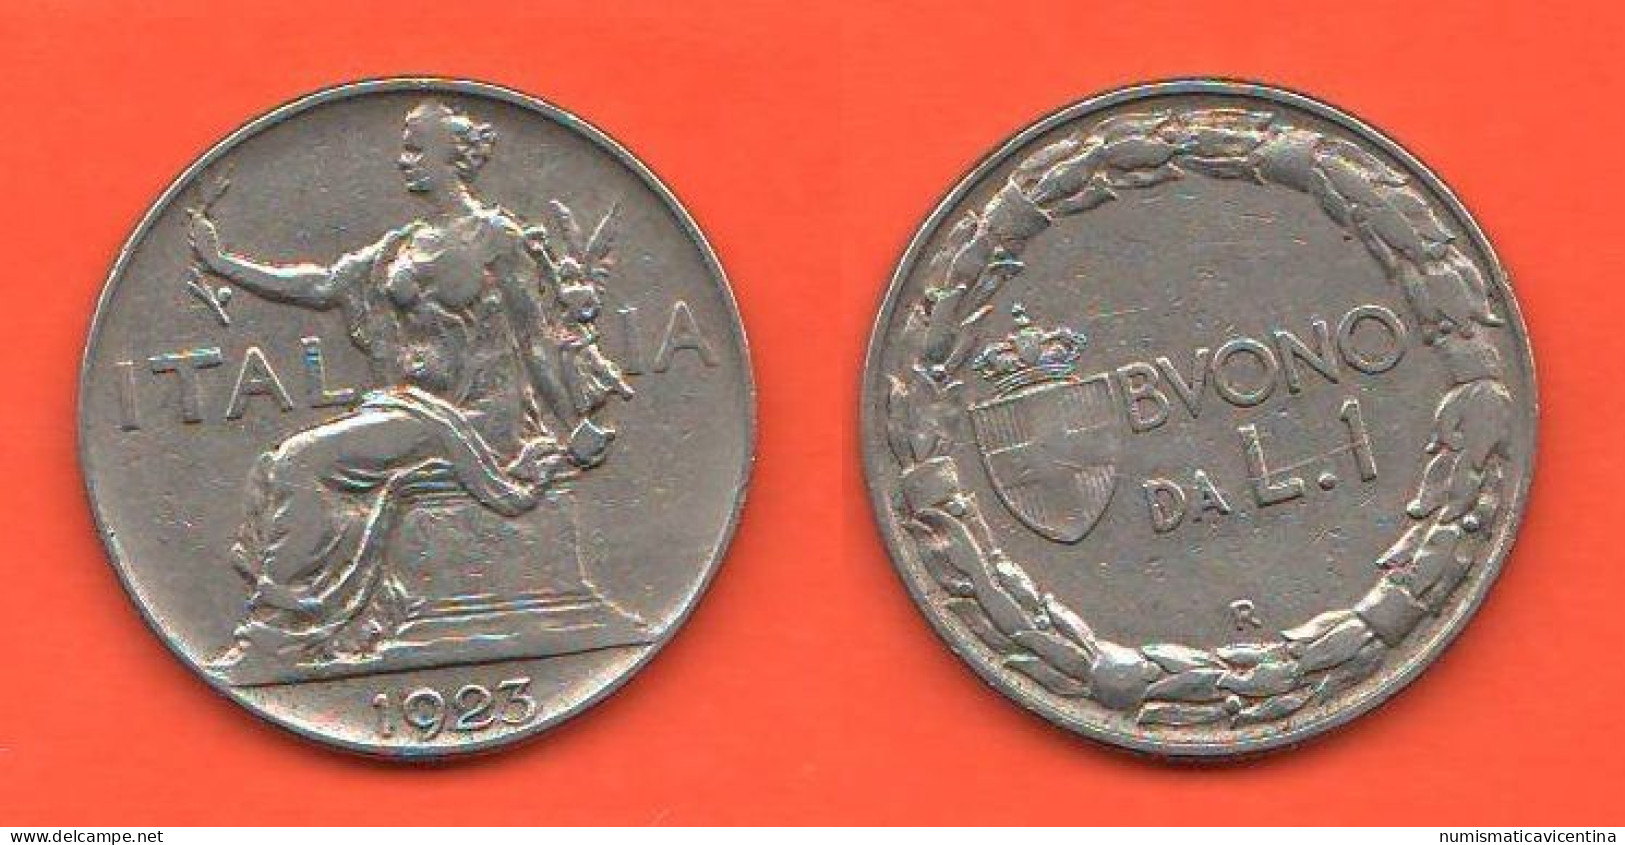 Italia Buono Da 1 Lira 1923 Nickel Coin  C 8 - 1900-1946 : Vittorio Emanuele III & Umberto II